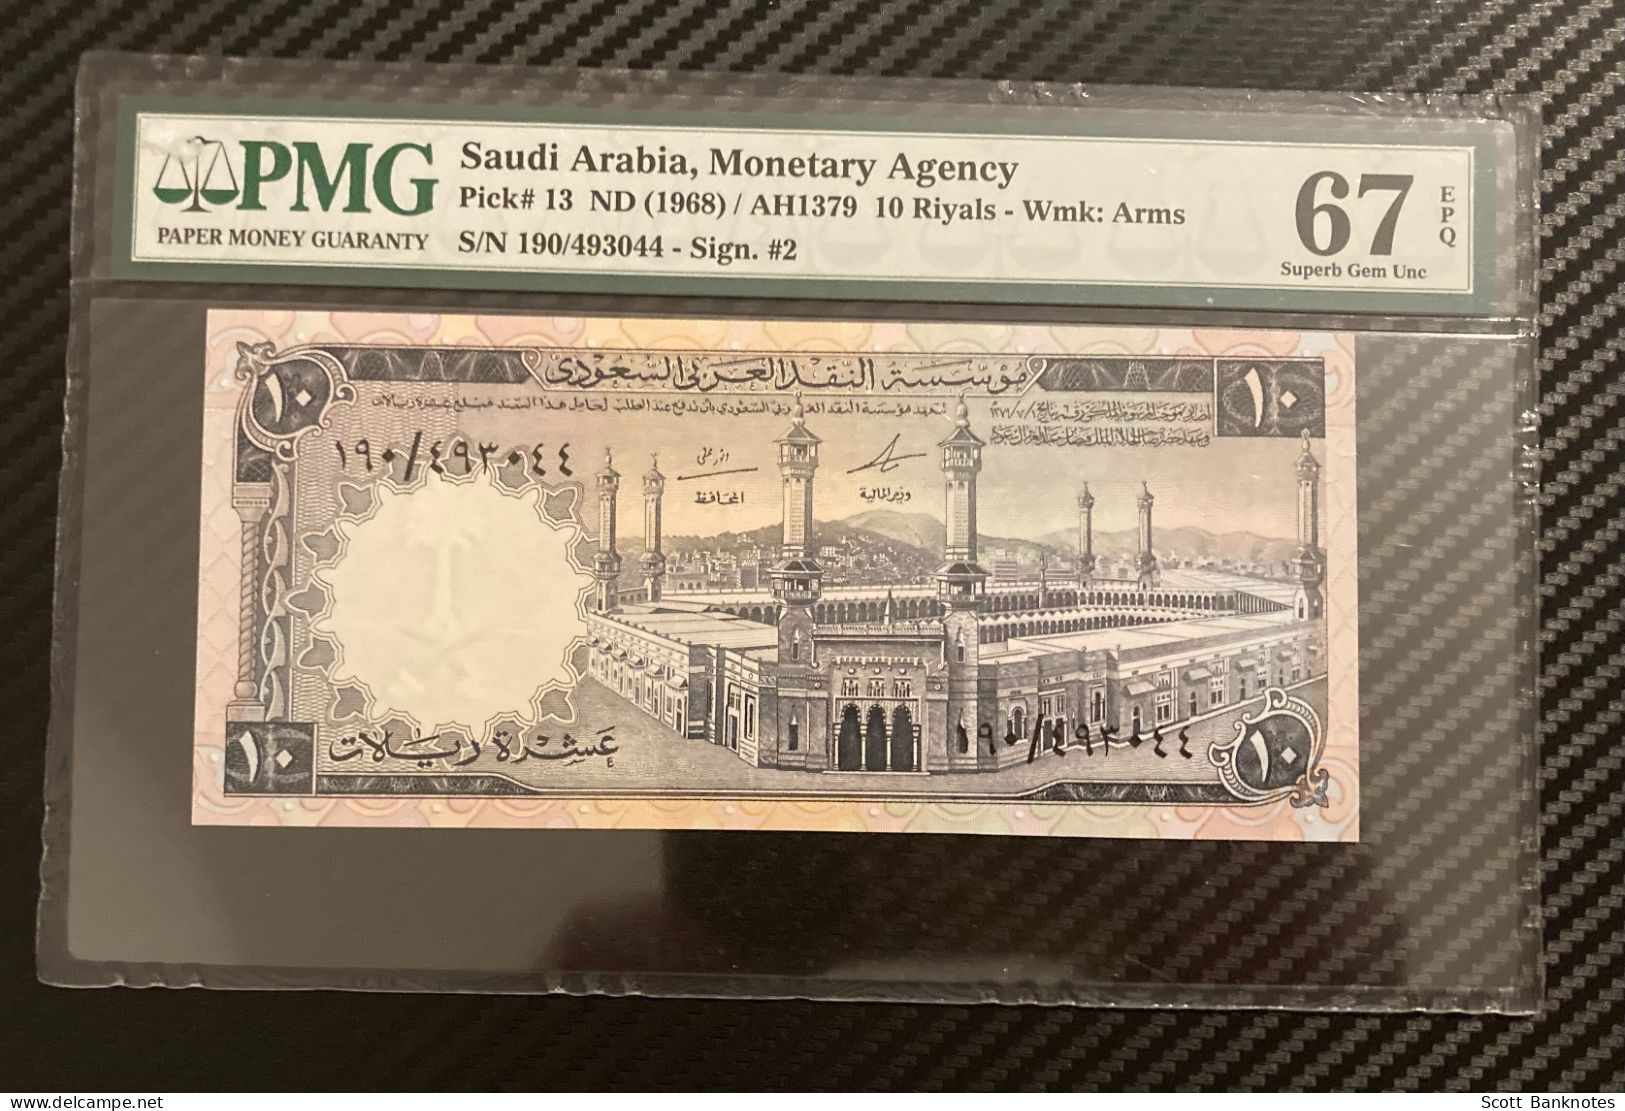 1968, PMG 67 Superb Gem Unc, Saudi Arabia 10 Riyals, Wmk Arms, Pick 13, SN 190 493044 - Arabie Saoudite